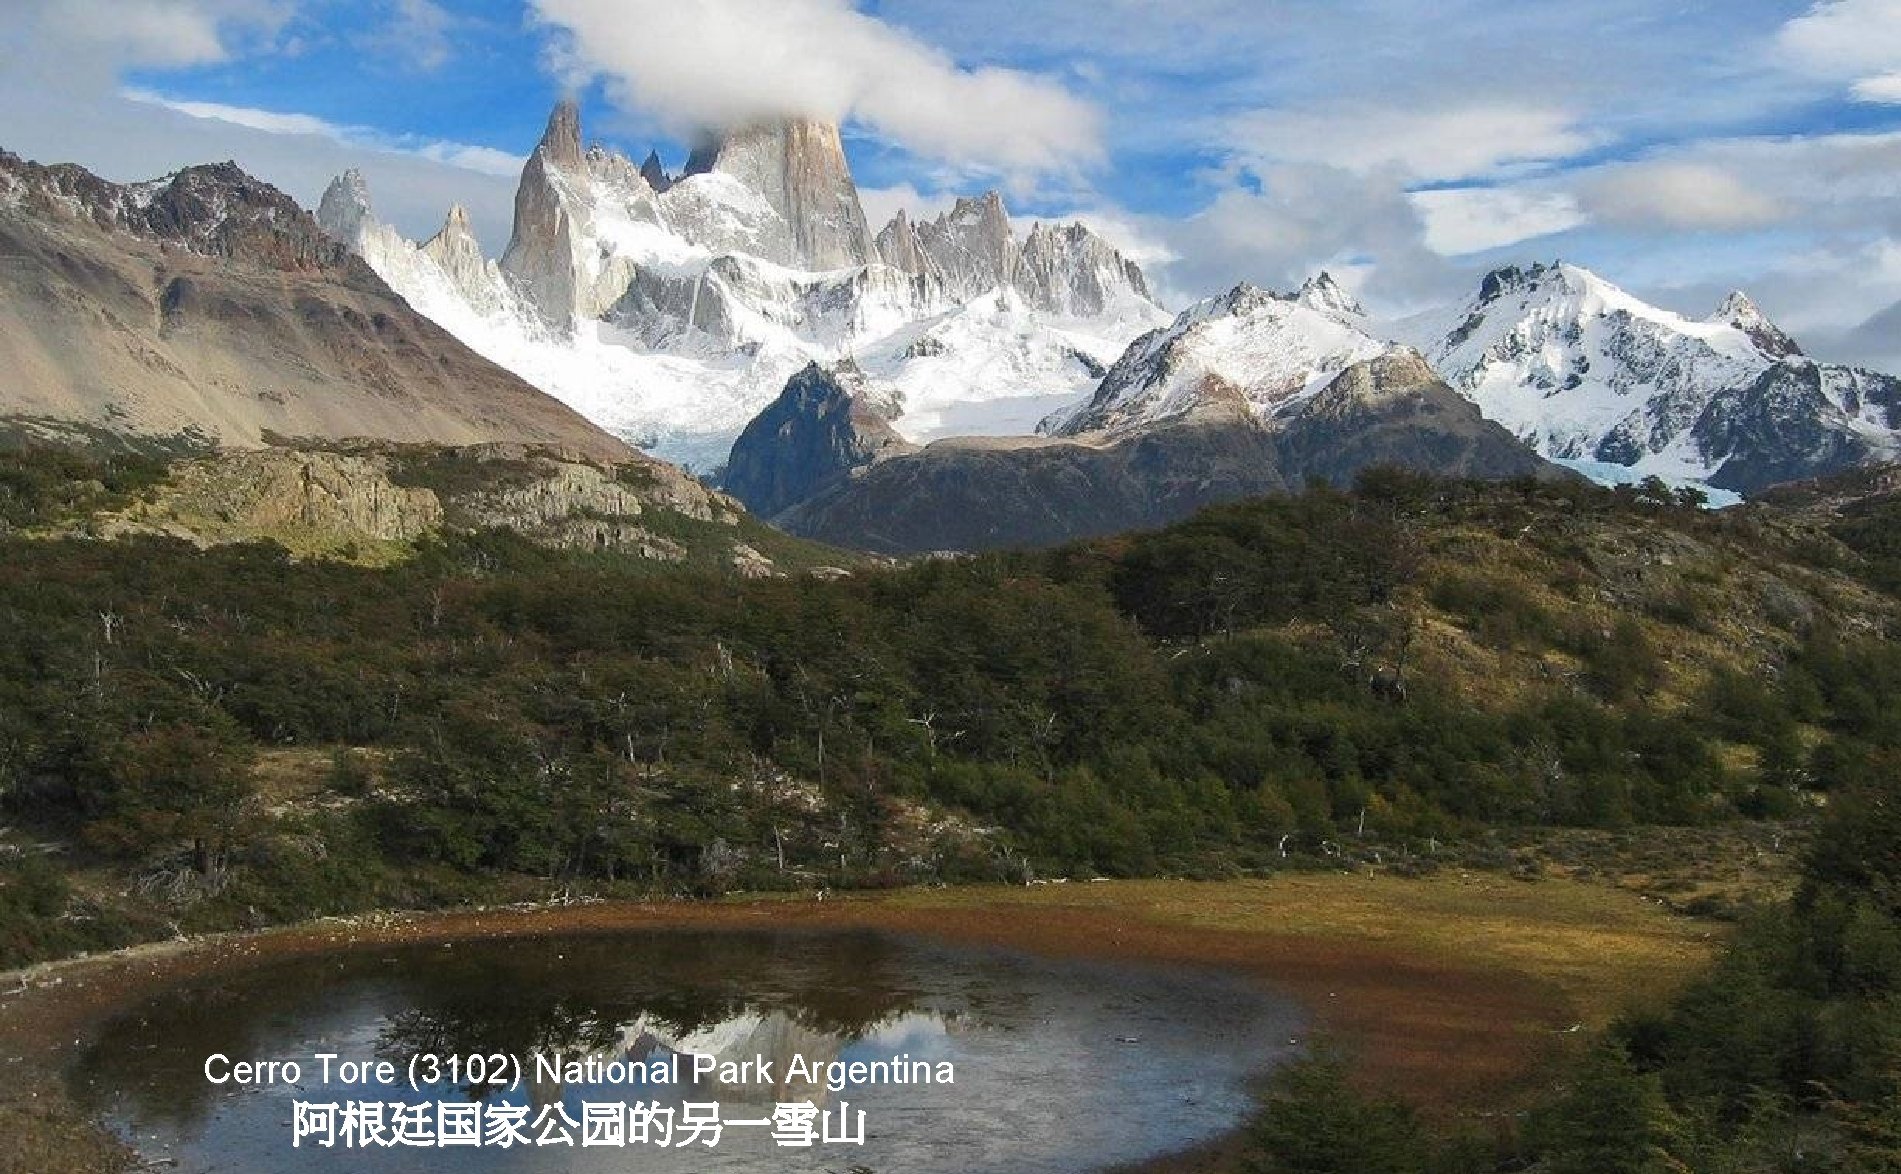 Cerro Tore (3102) National Park Argentina 阿根廷国家公园的另一雪山 